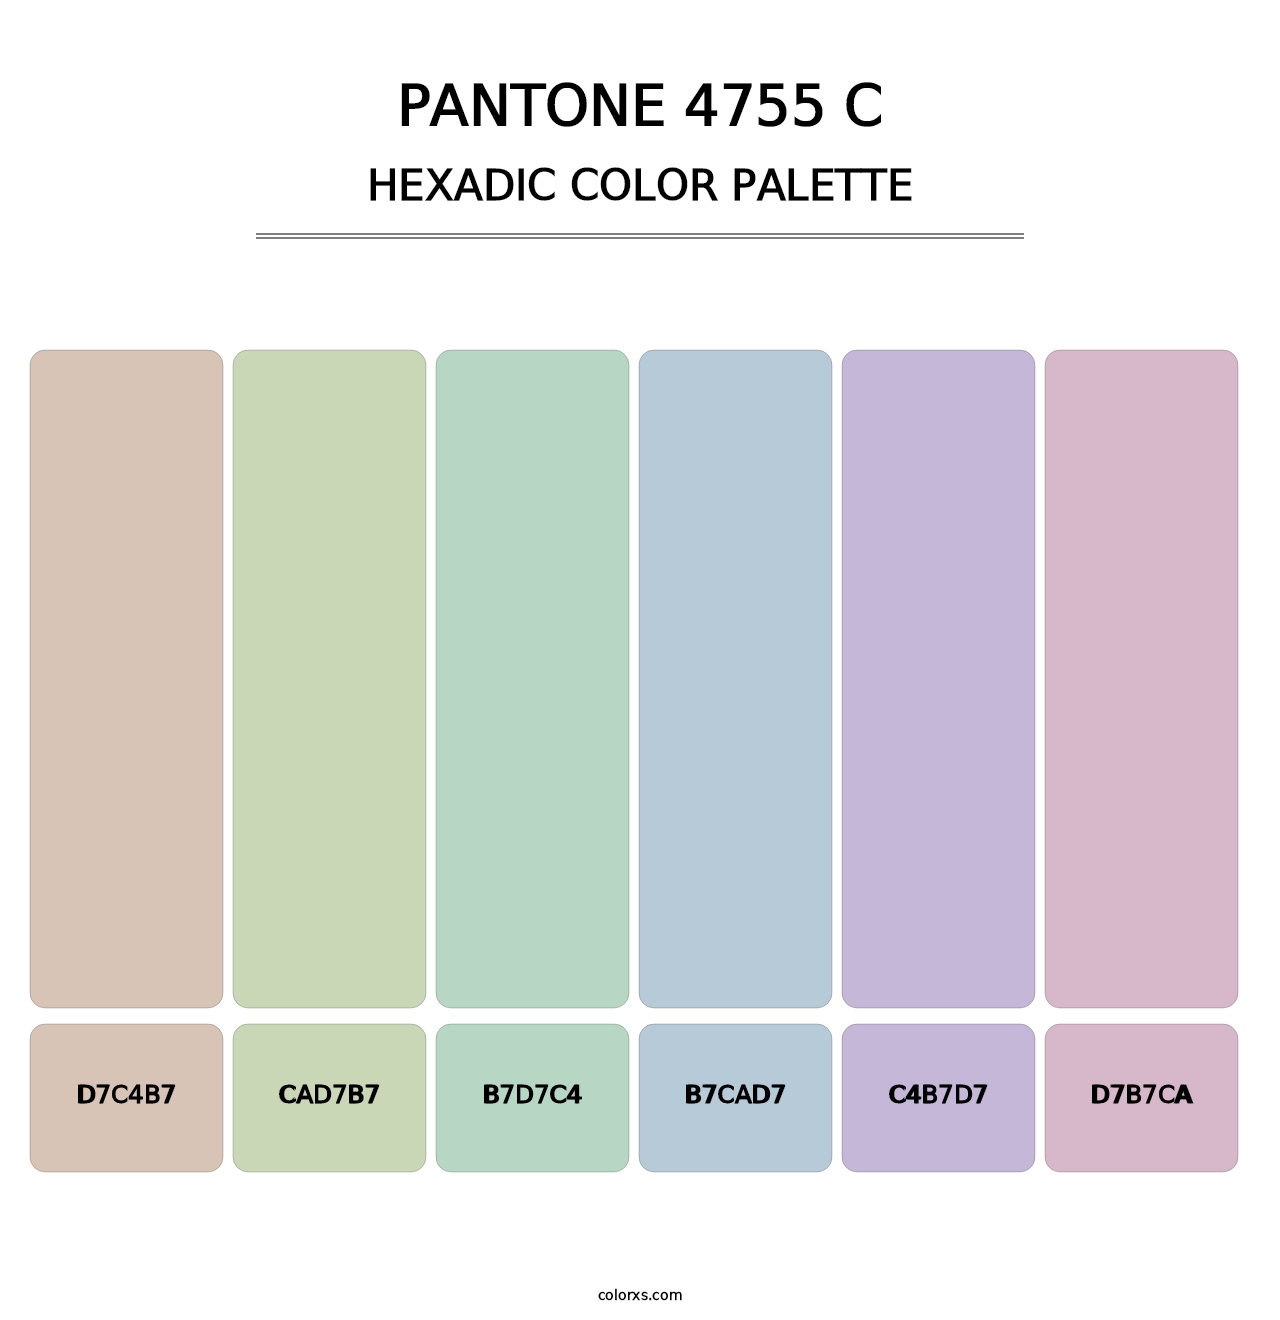 PANTONE 4755 C - Hexadic Color Palette